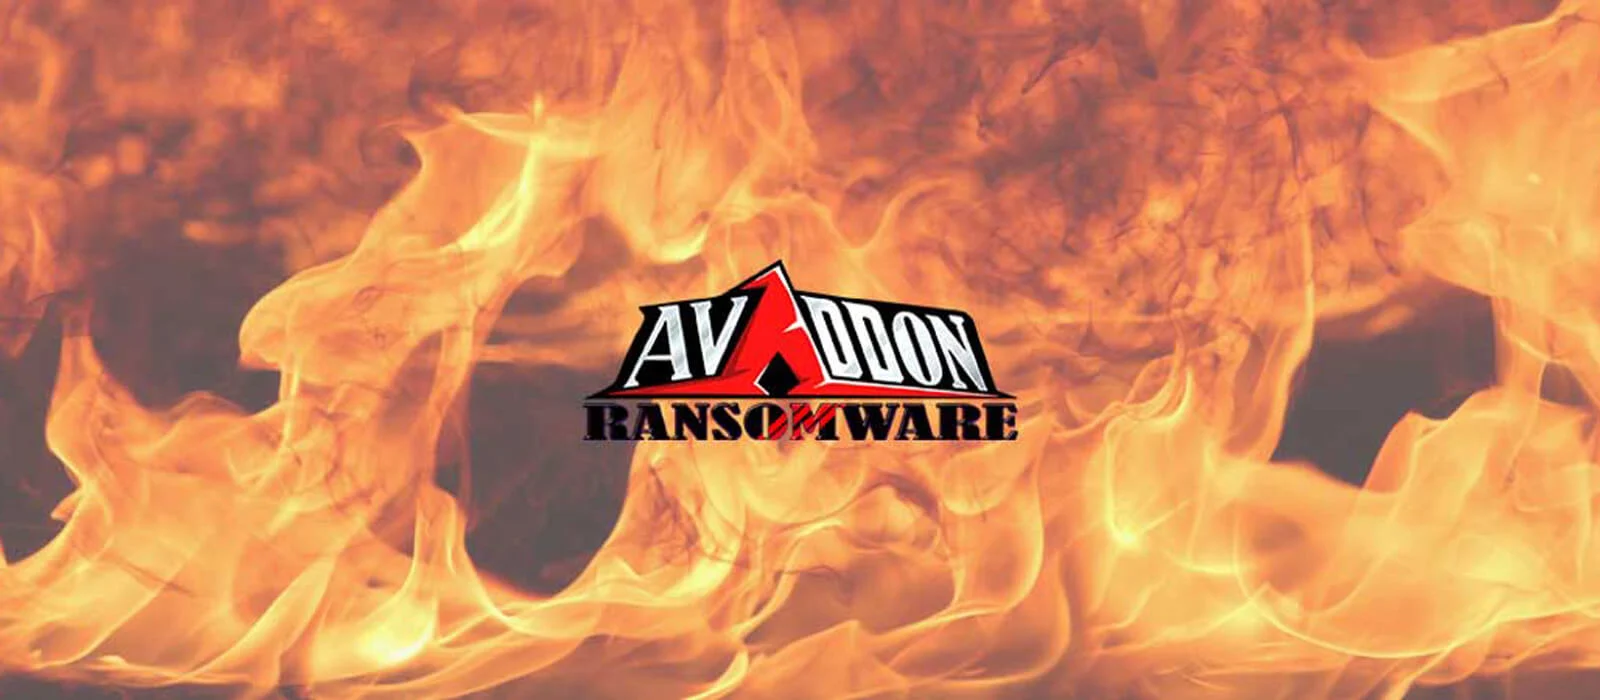 Avaddon-ransomware